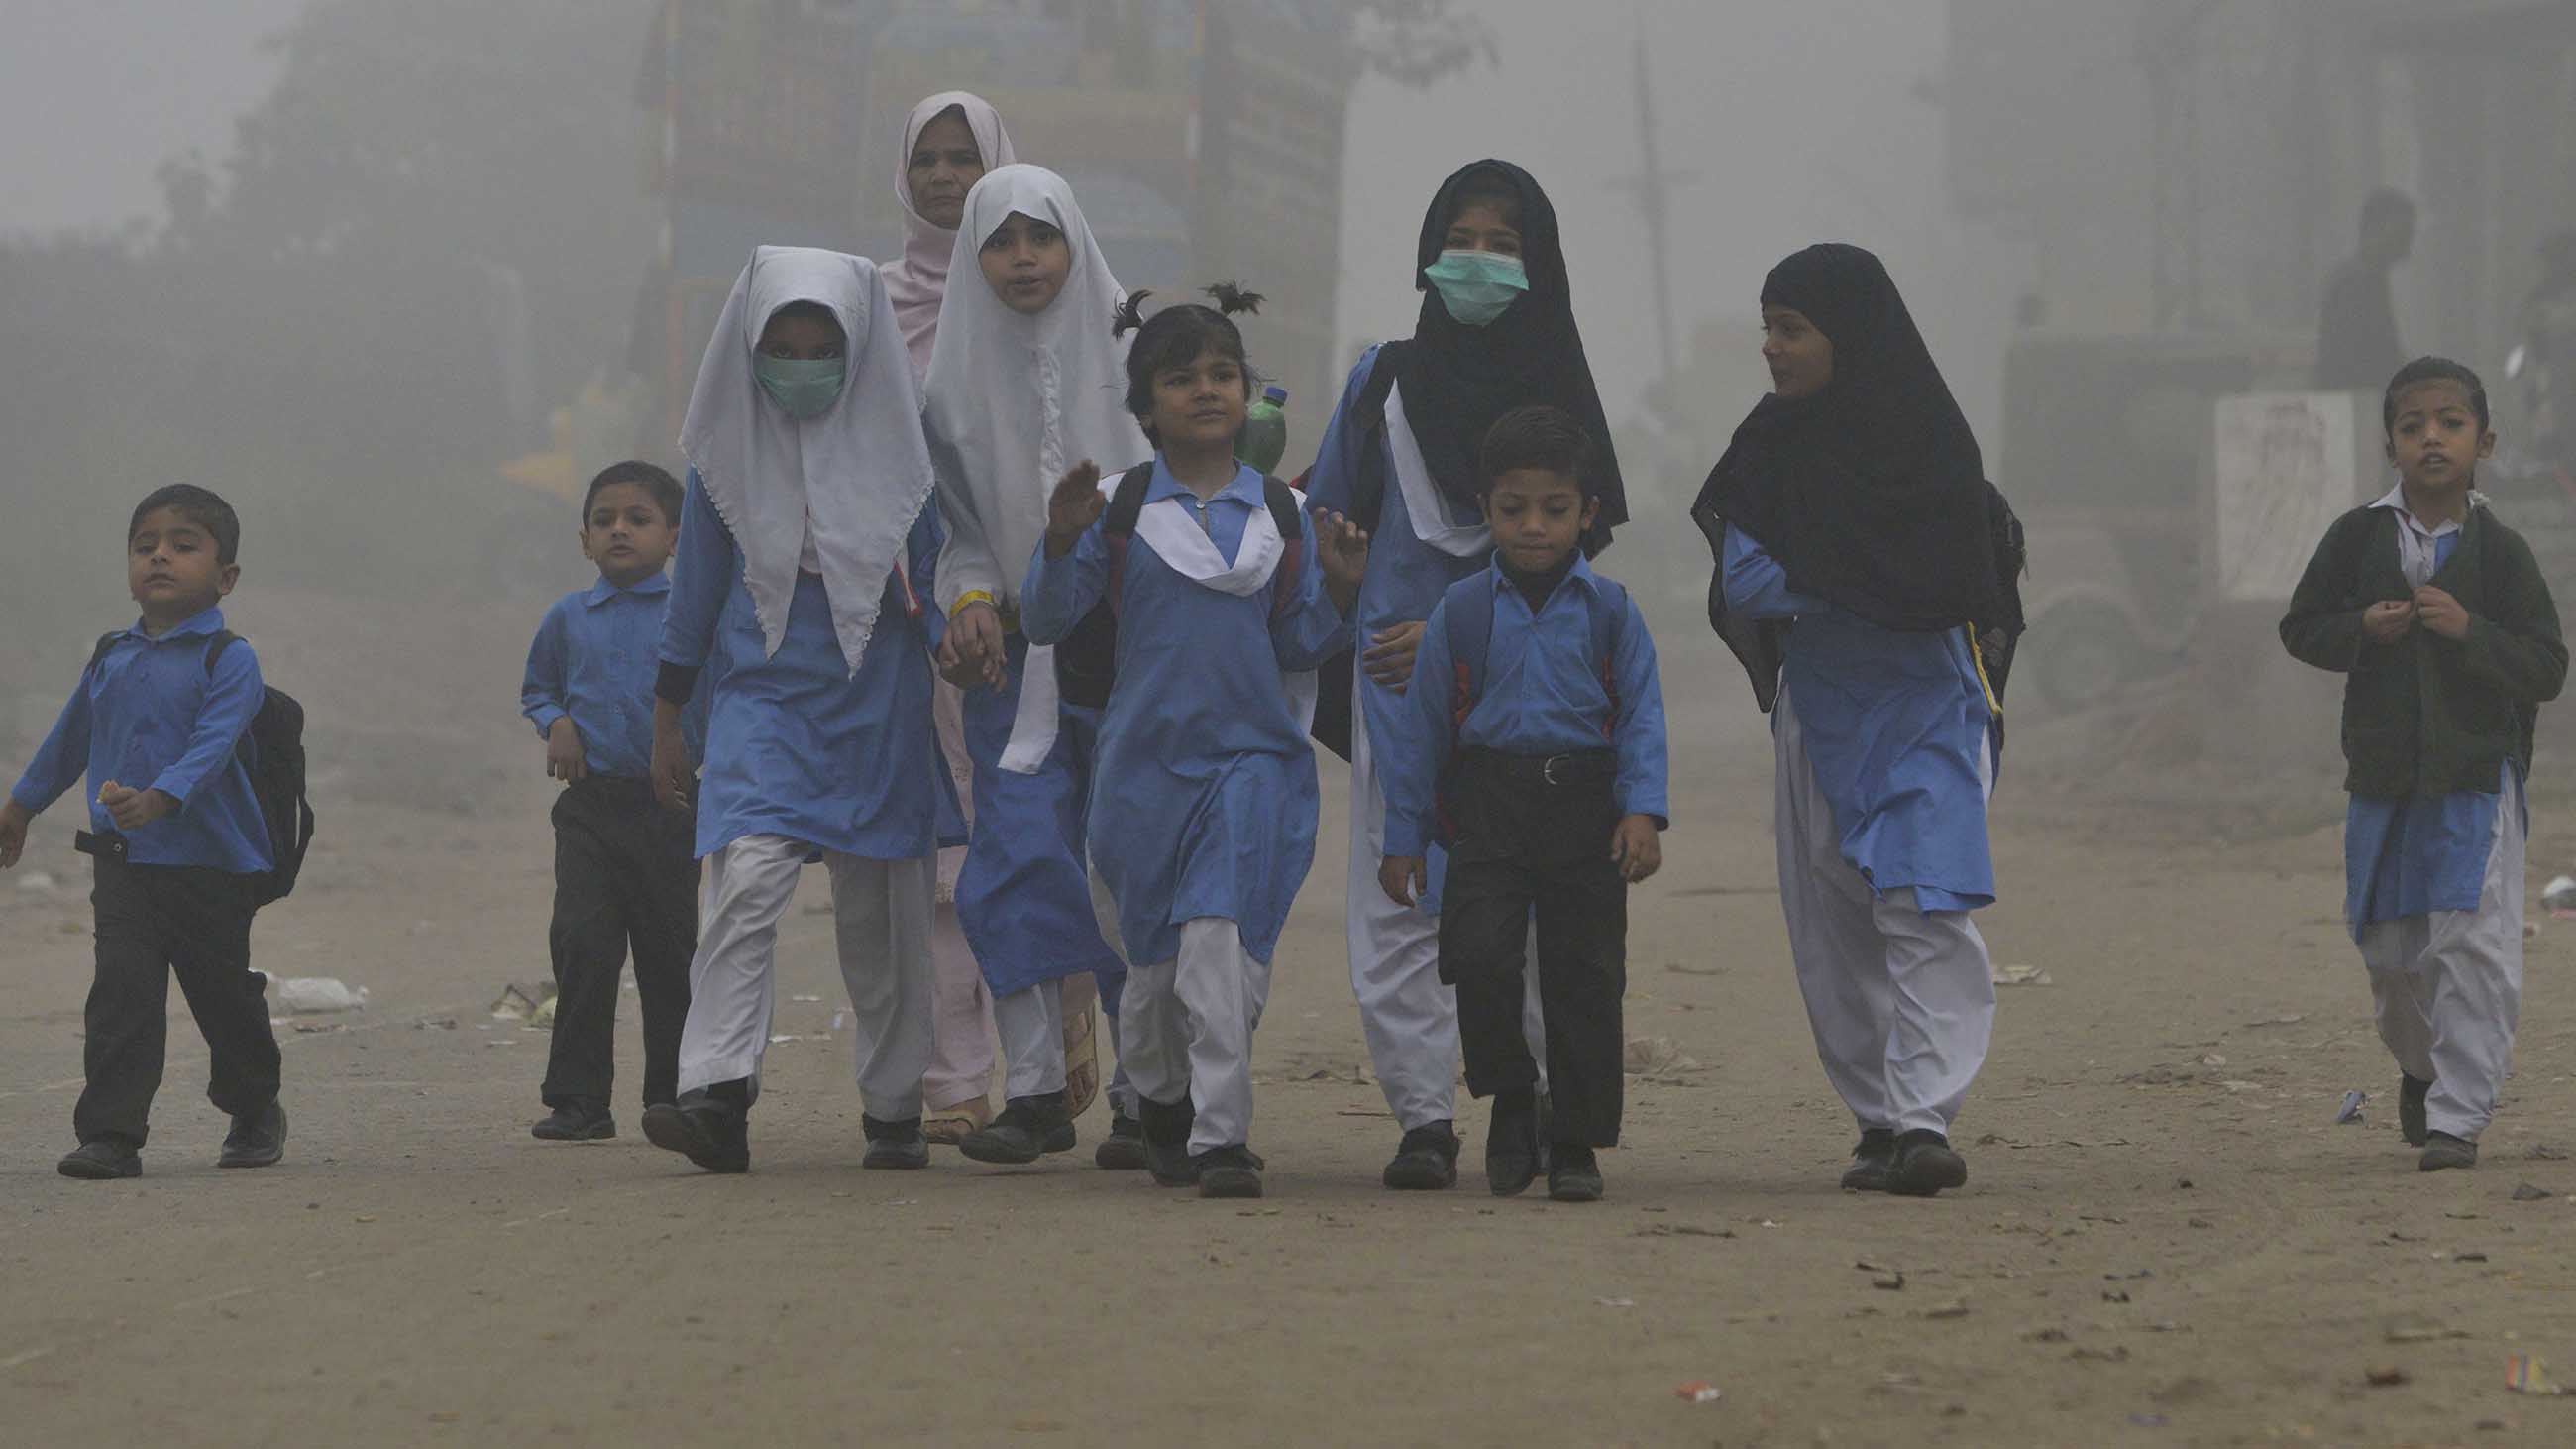 Pakistani children walk to school in heavy smog in Lahore in November, 2017.